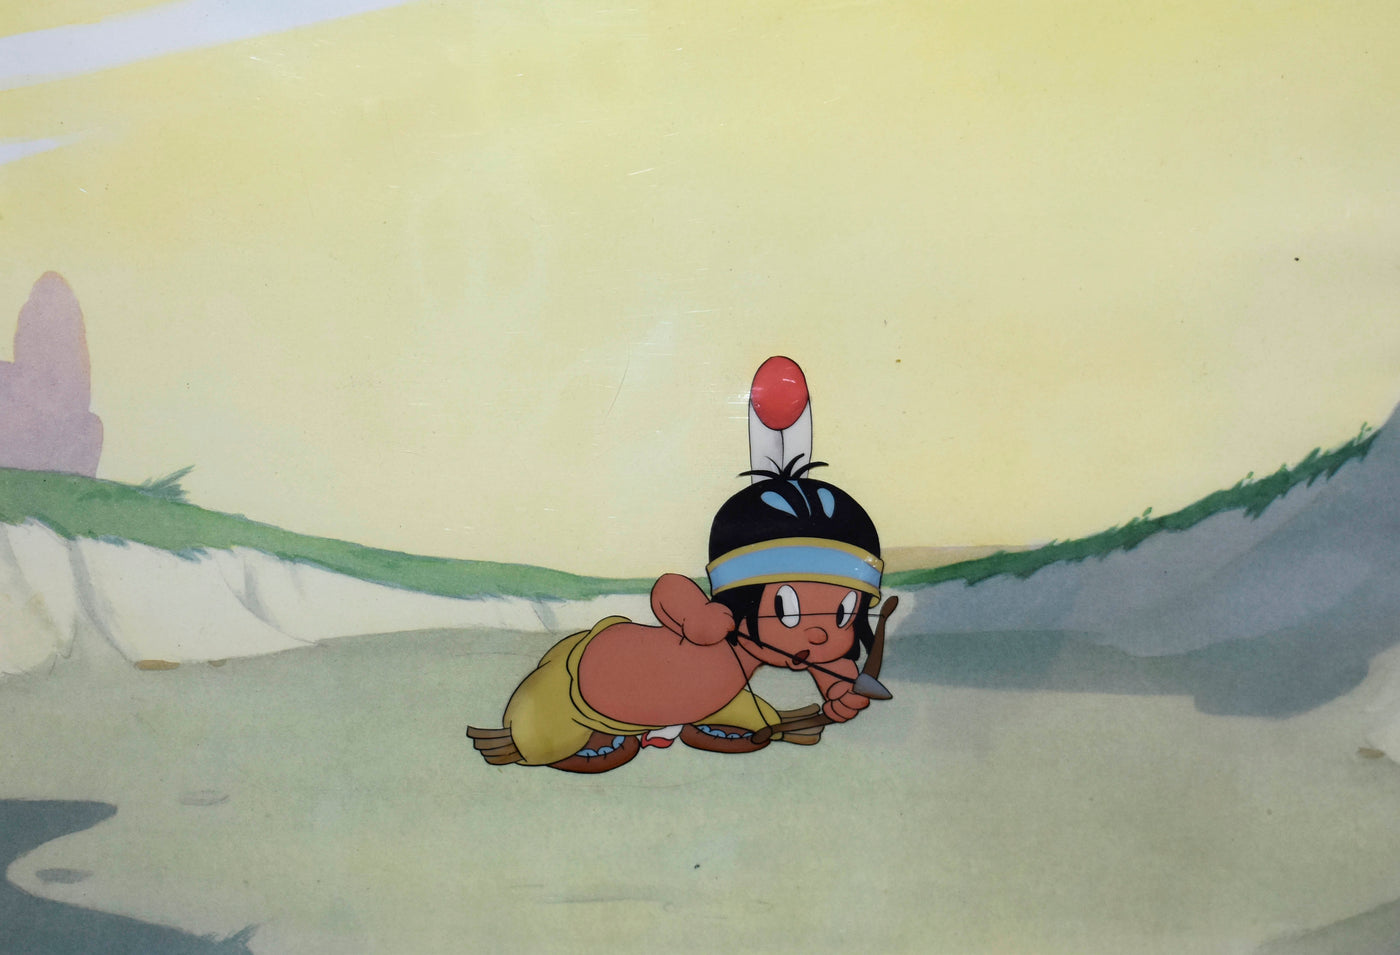 Original Walt Disney Production Cel from Little Hiawatha (1937)